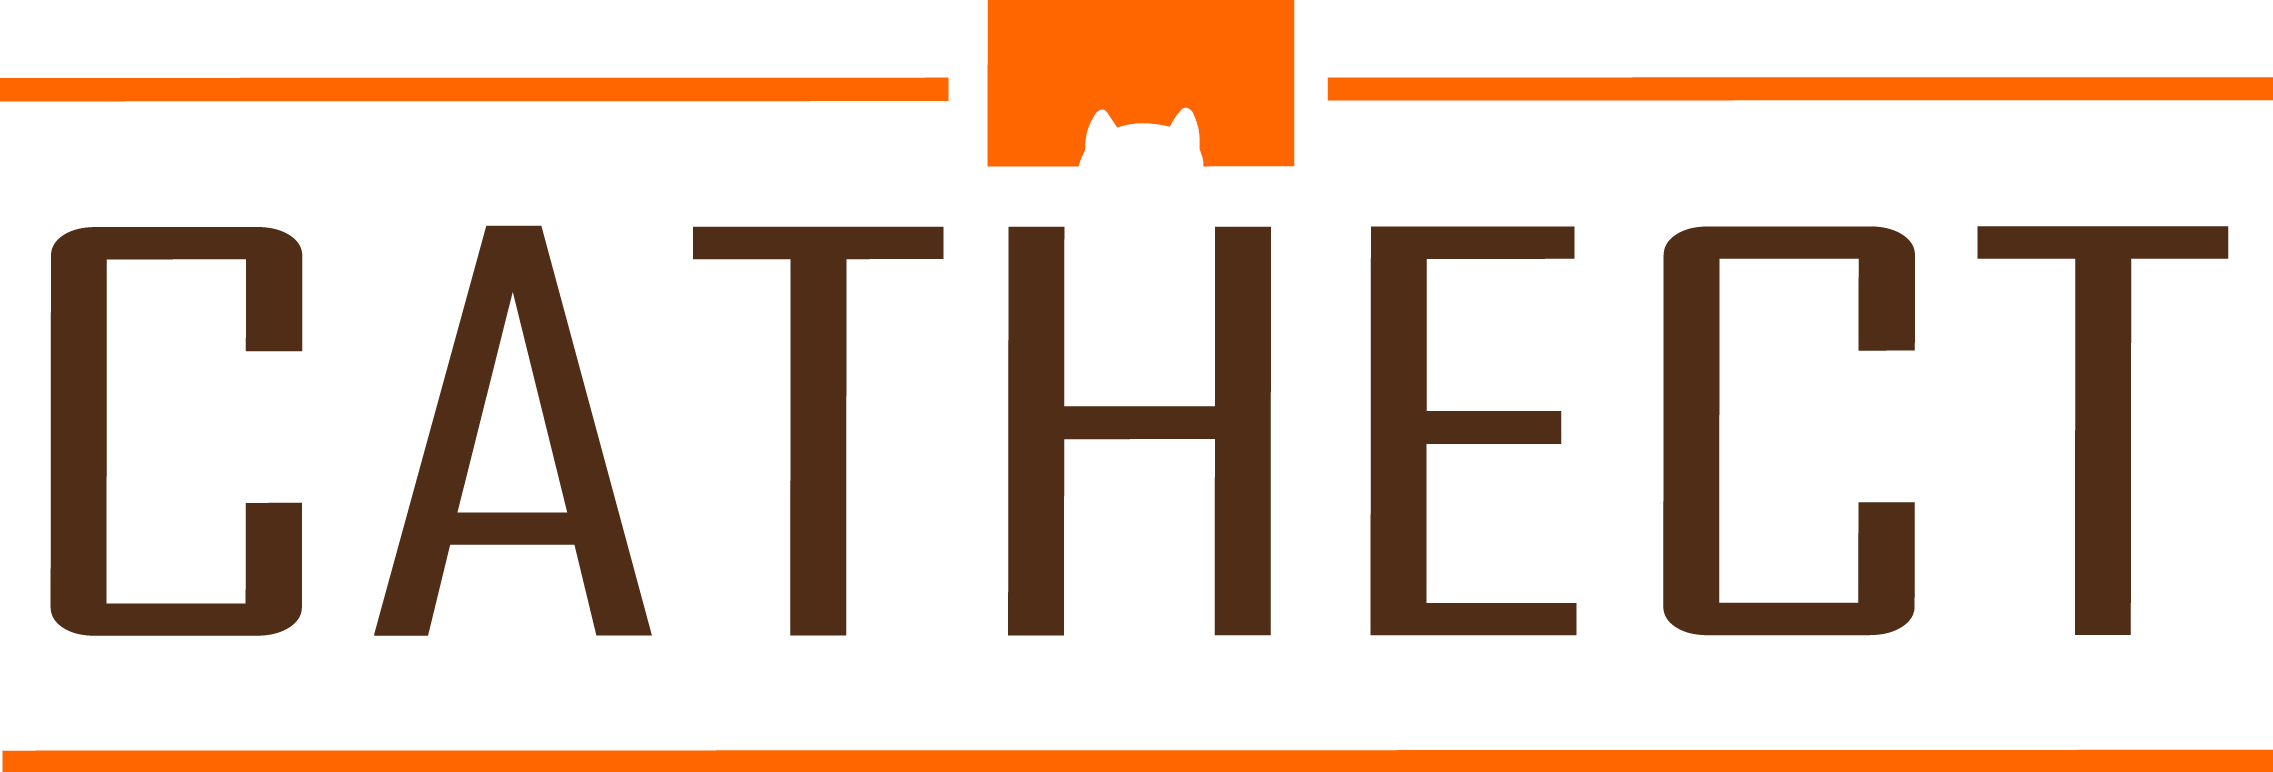 Logo Cathect-1